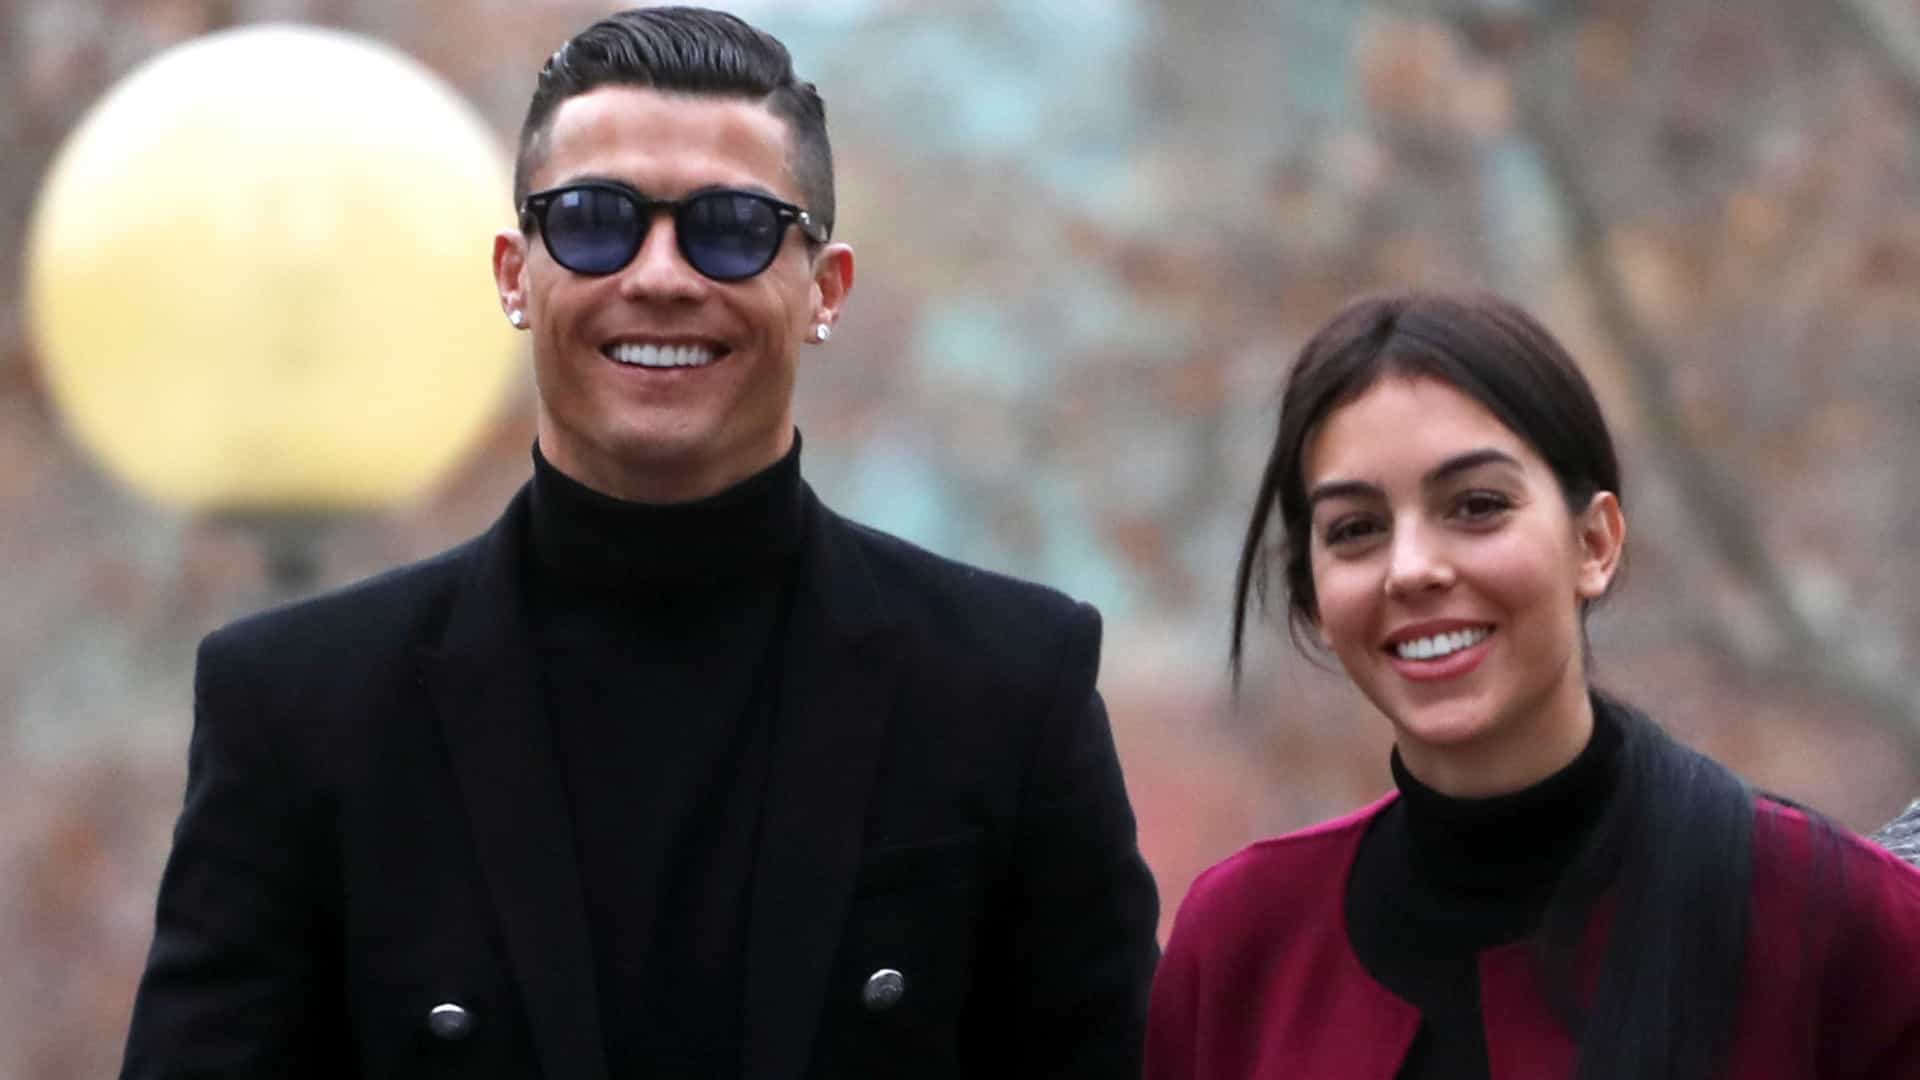 Cristiano Ronaldo et Georgina Rodriguez : Leurs vacances très caliente !